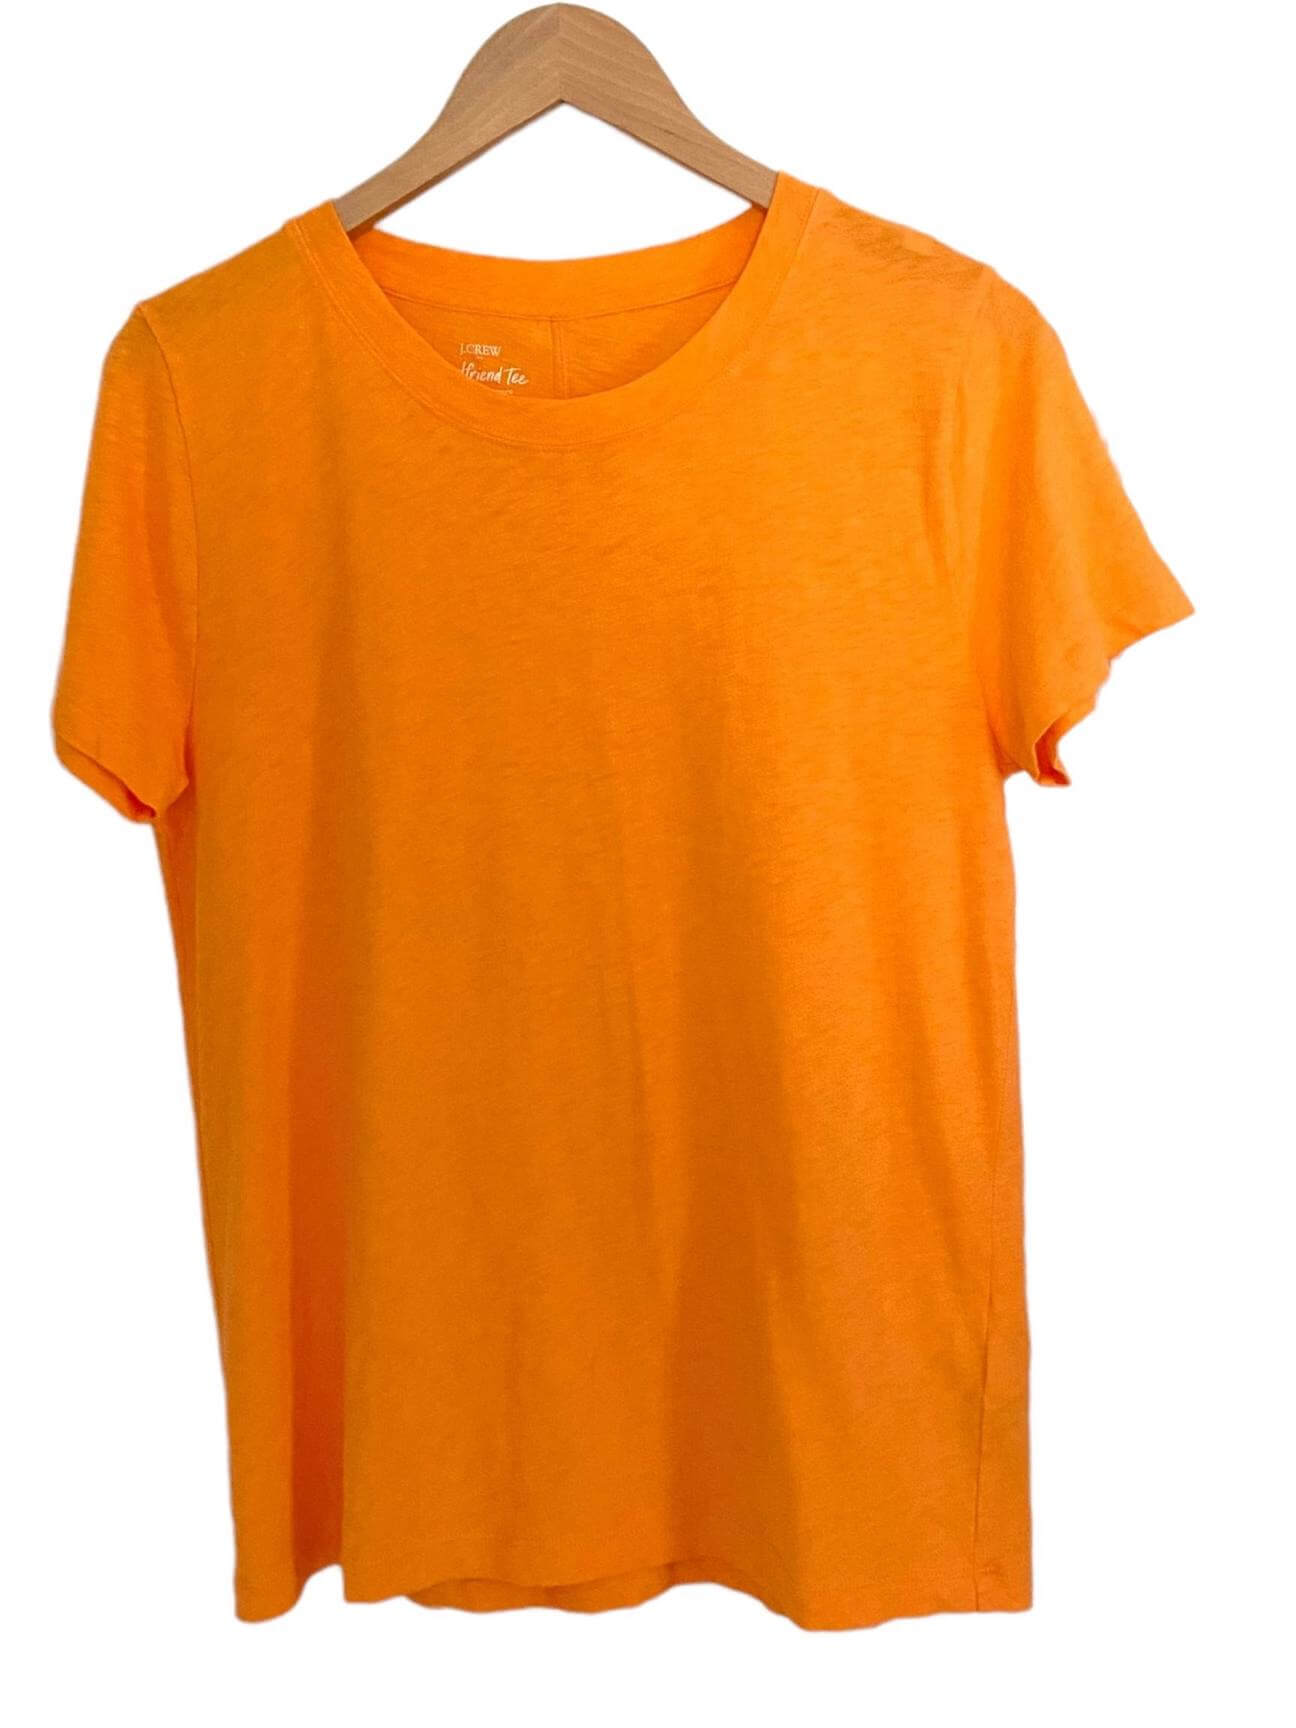 Bright Spring J.CREW orange t-shirt